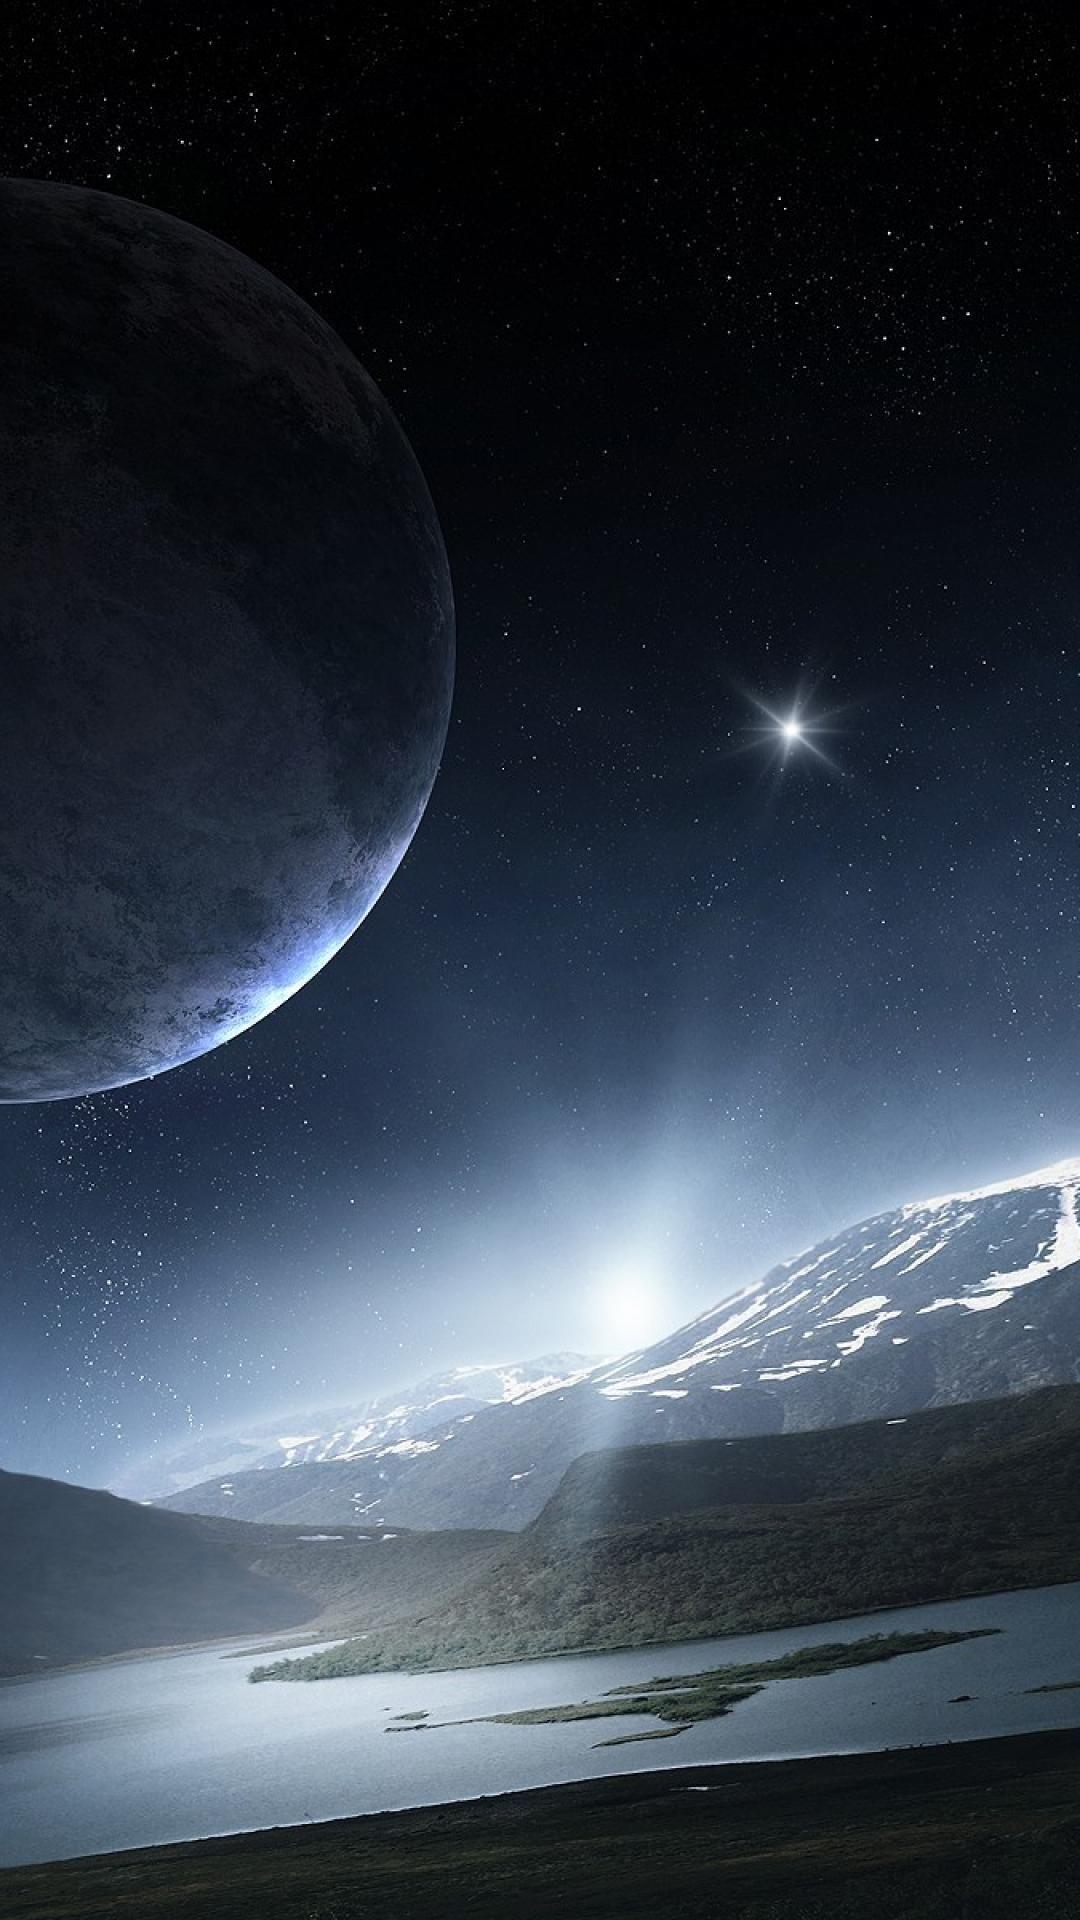 Mass Effect Andromeda Planet 4k Phone Wallpaper 2 by AllanZax on DeviantArt